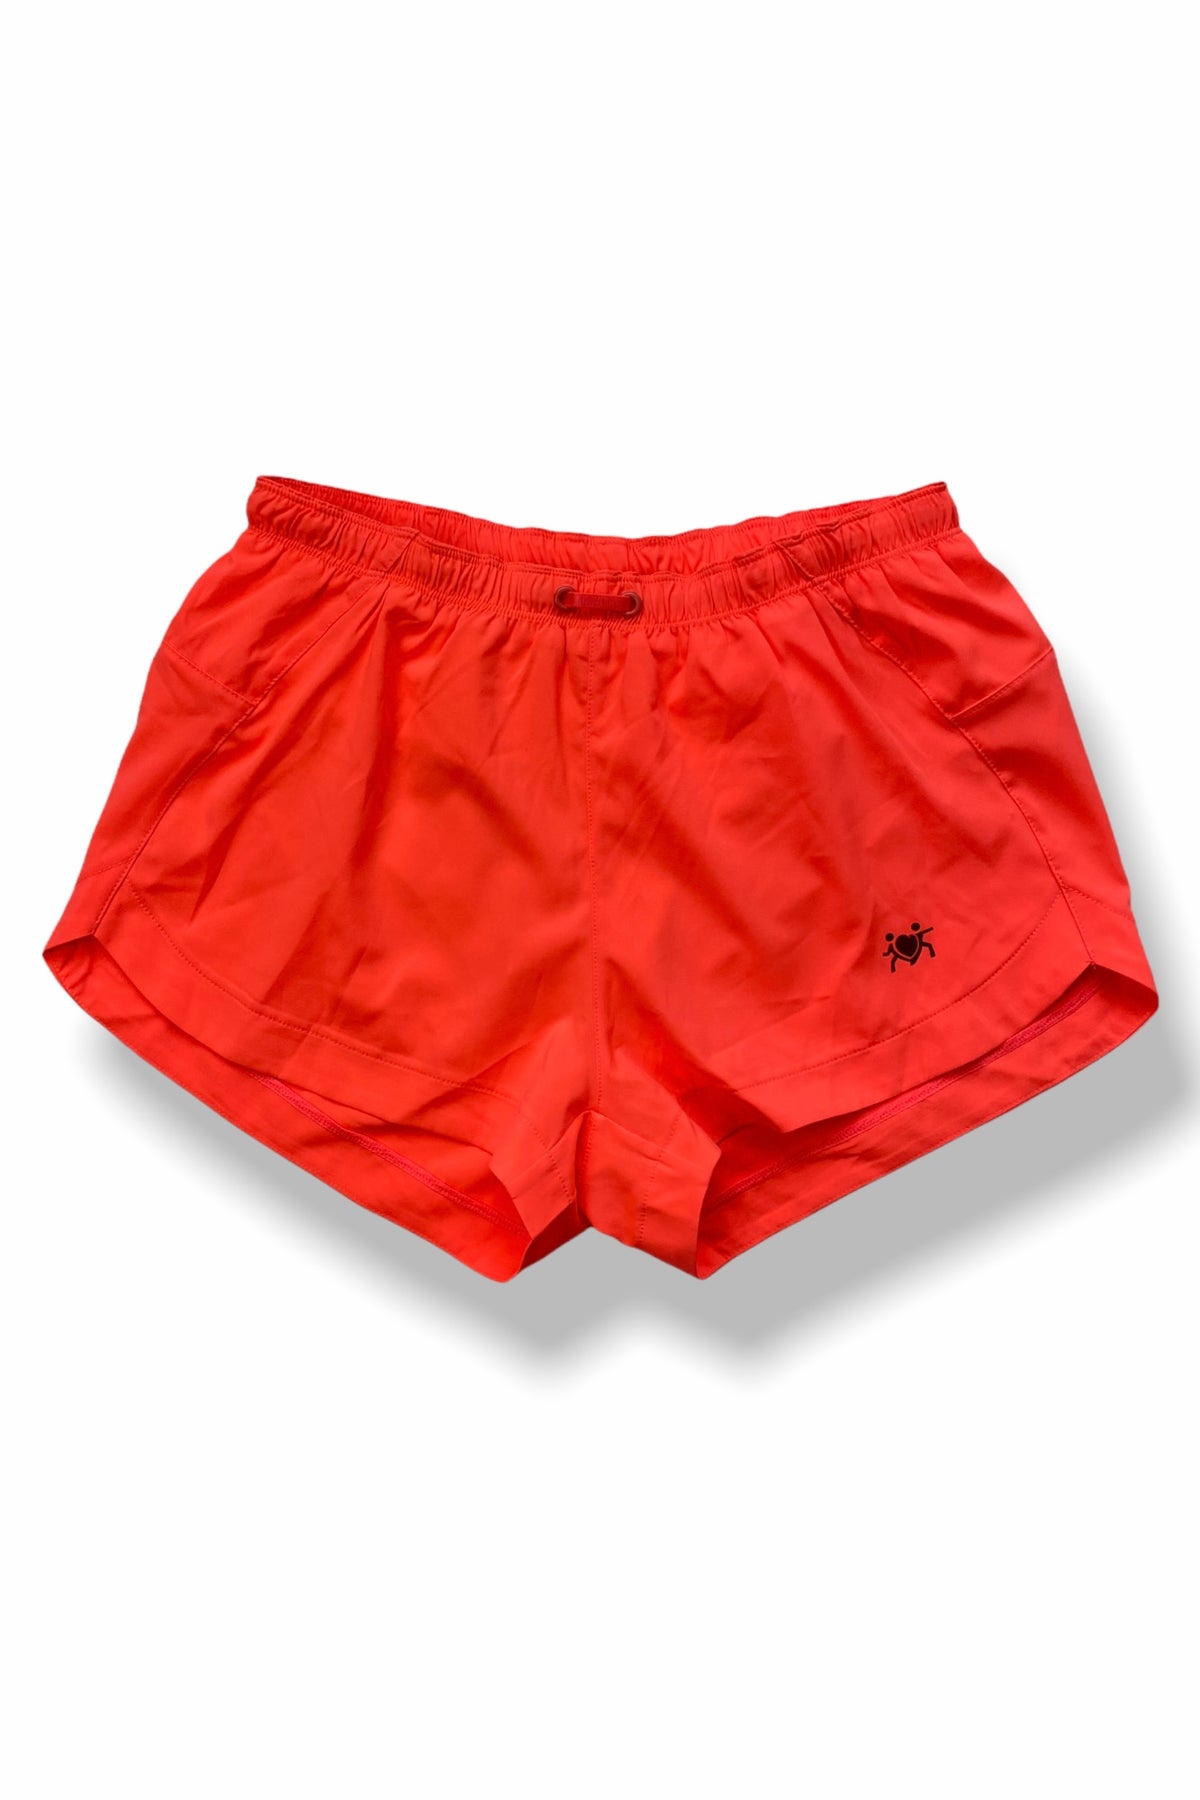 Schenley Run Shorts (hot coral)